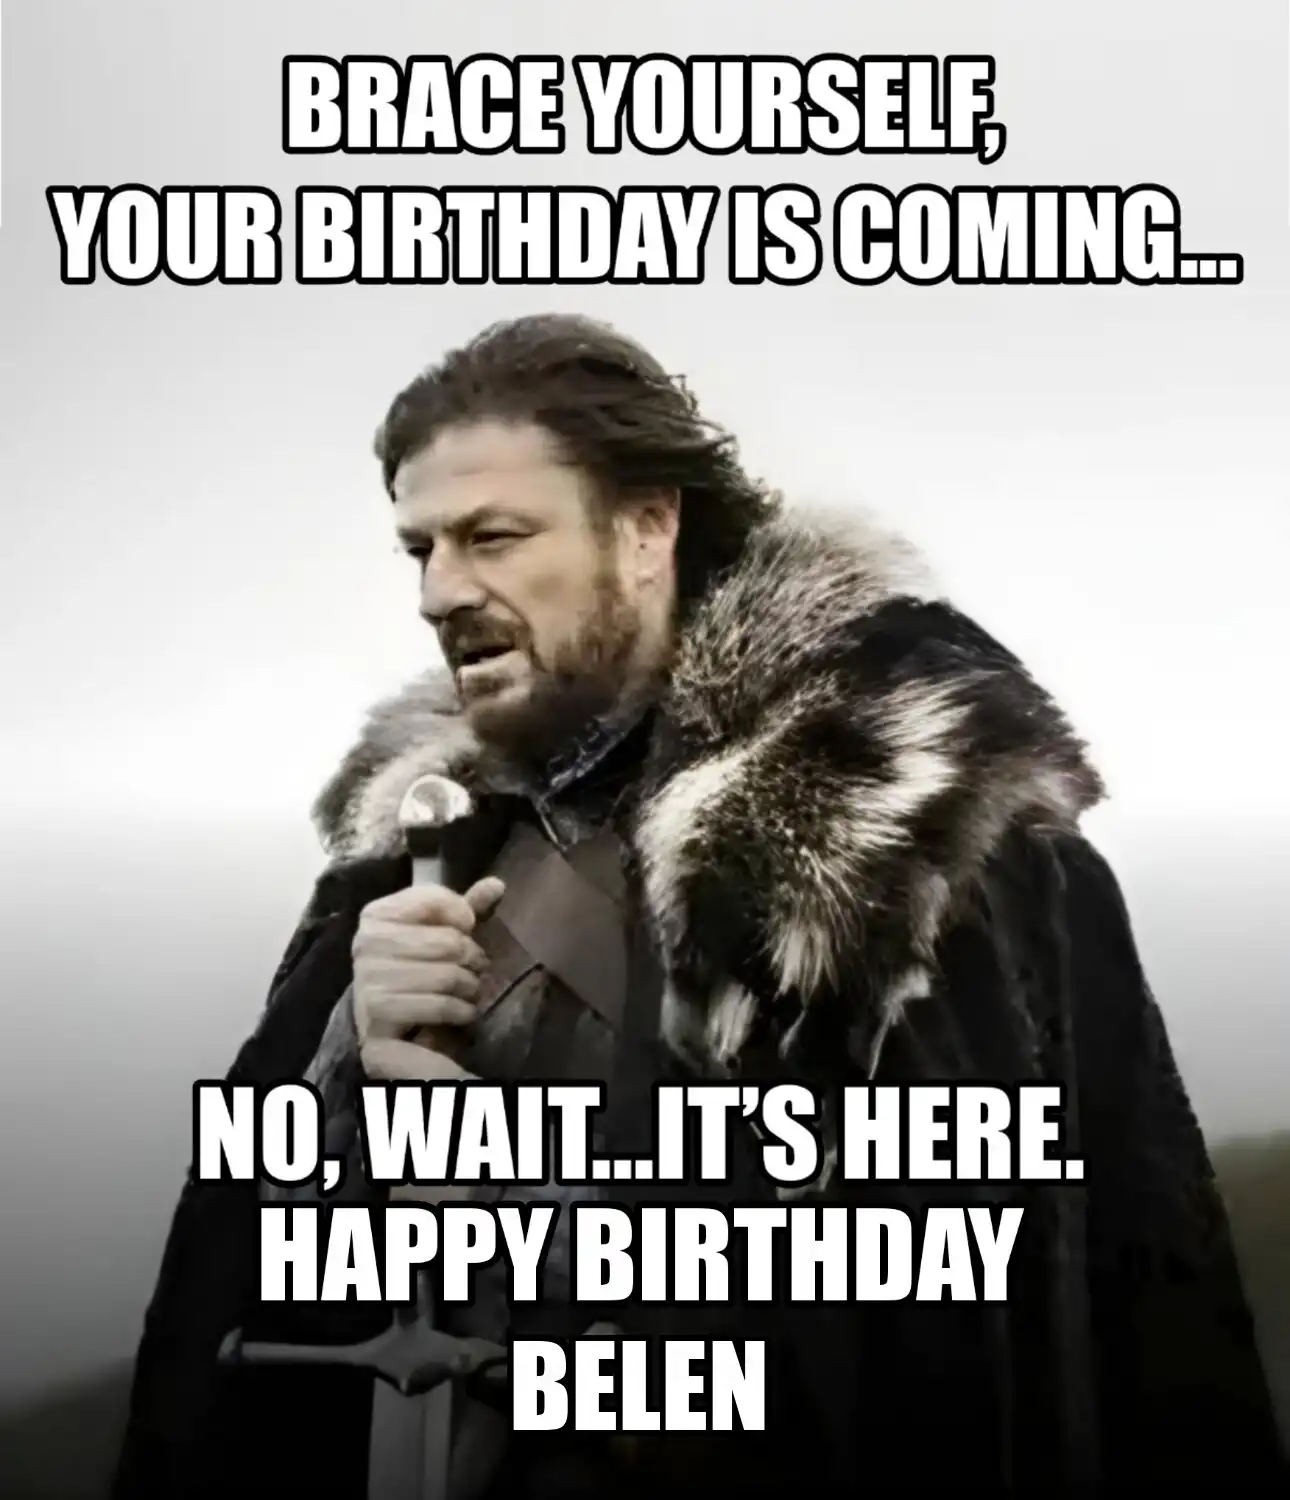 Happy Birthday Belen Brace Yourself Your Birthday Is Coming Meme